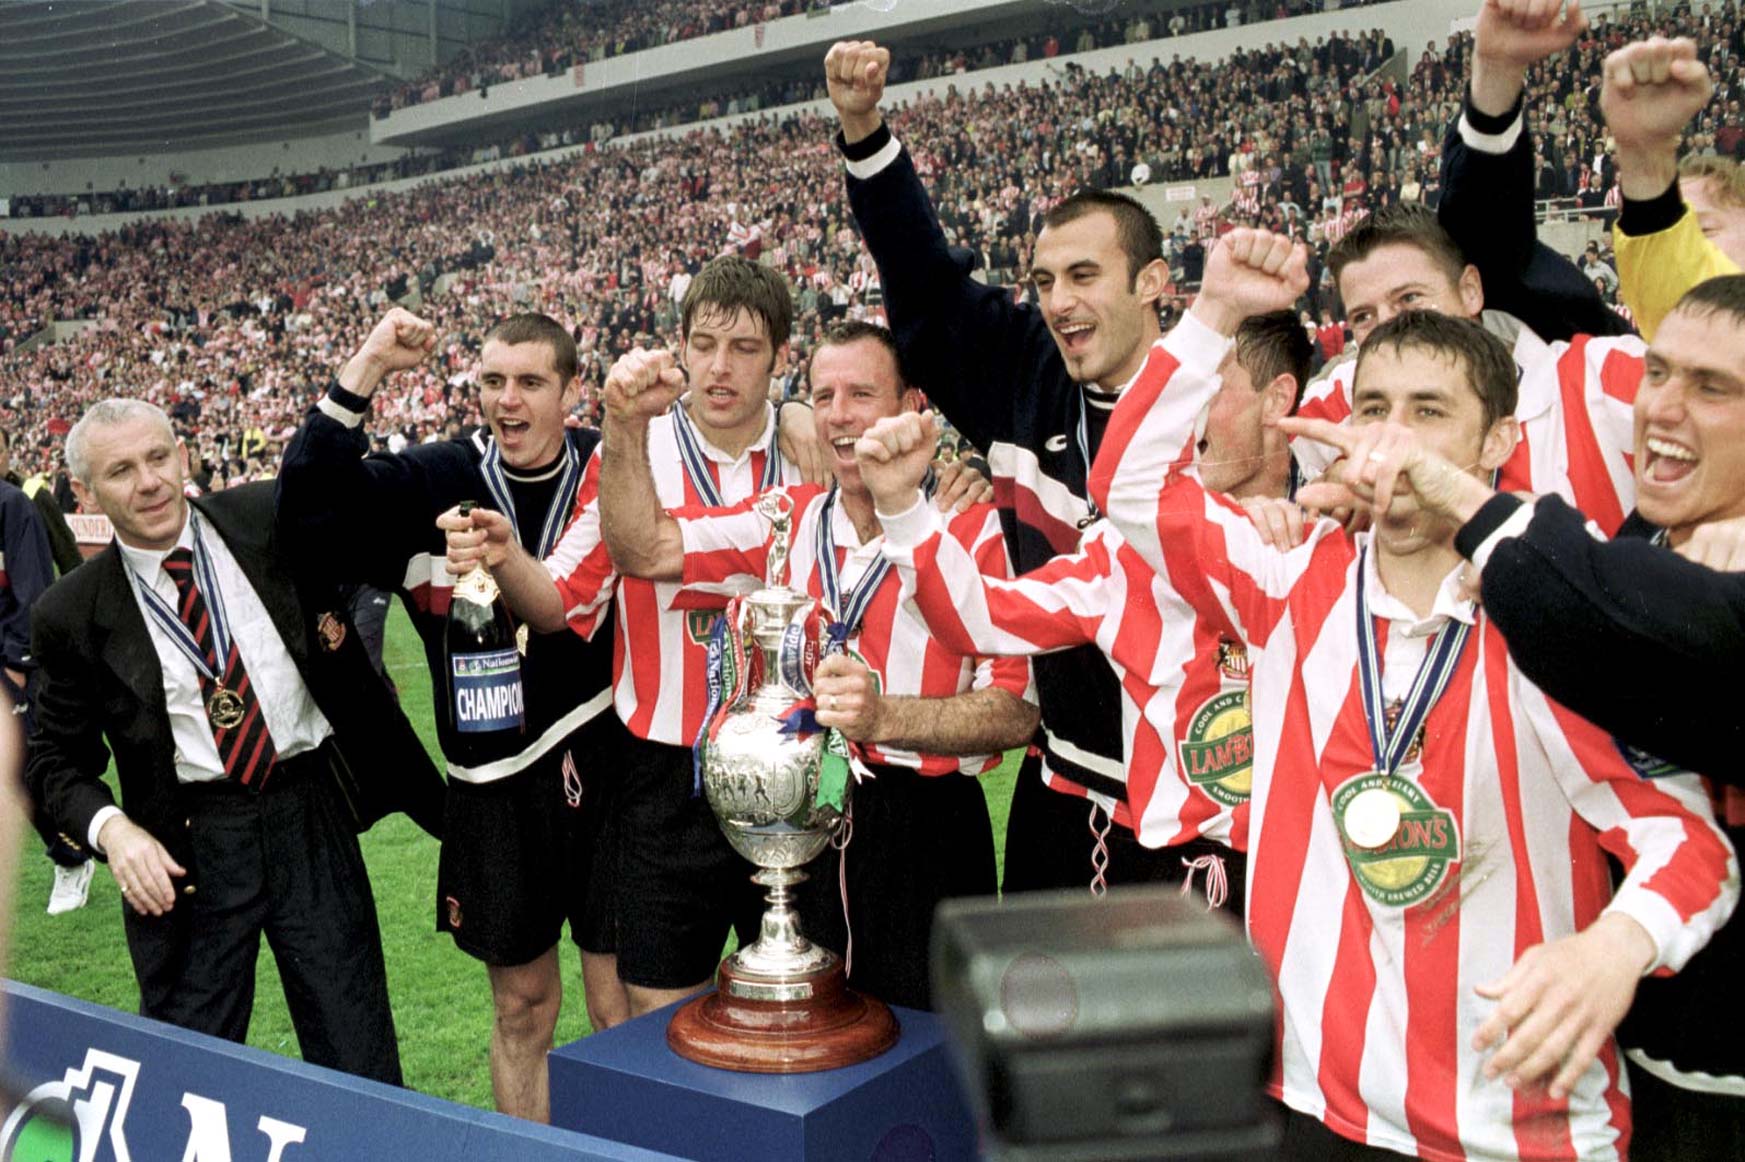 Sunderland, 1998/99 – 105 points